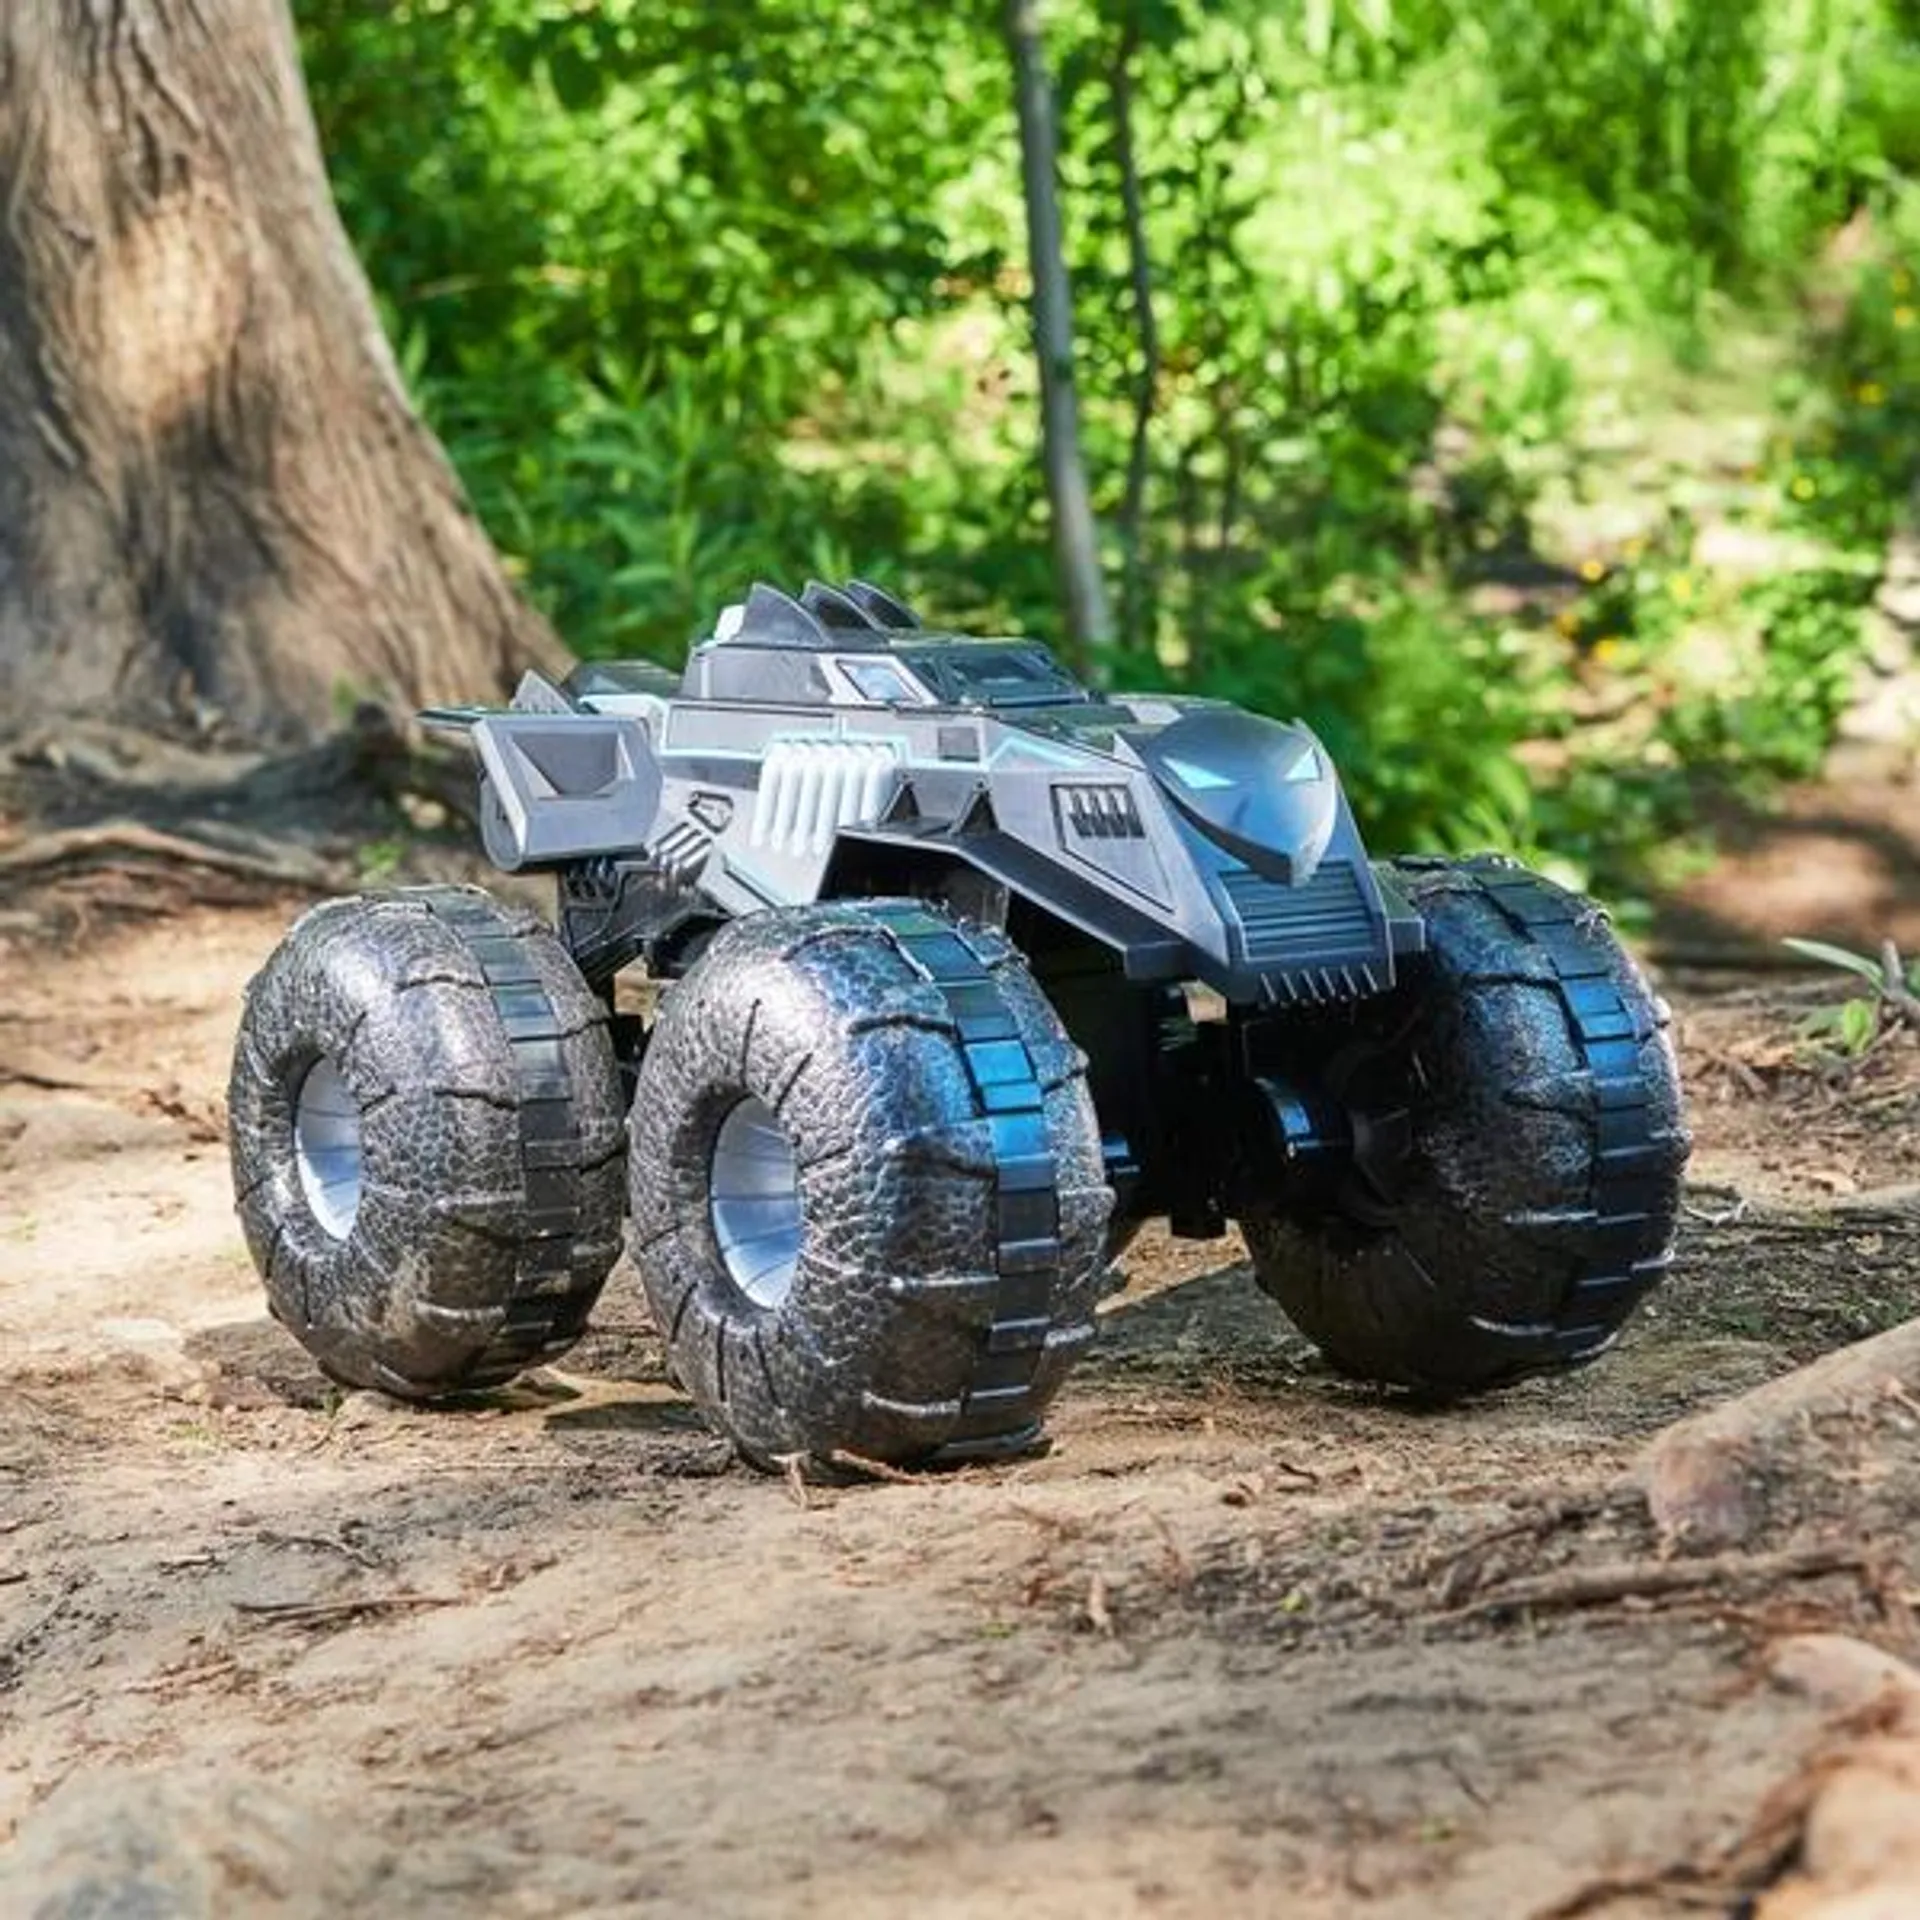 Batman All-Terrain Batmobile Remote Control 1:15 Water-Resistant Vehicle